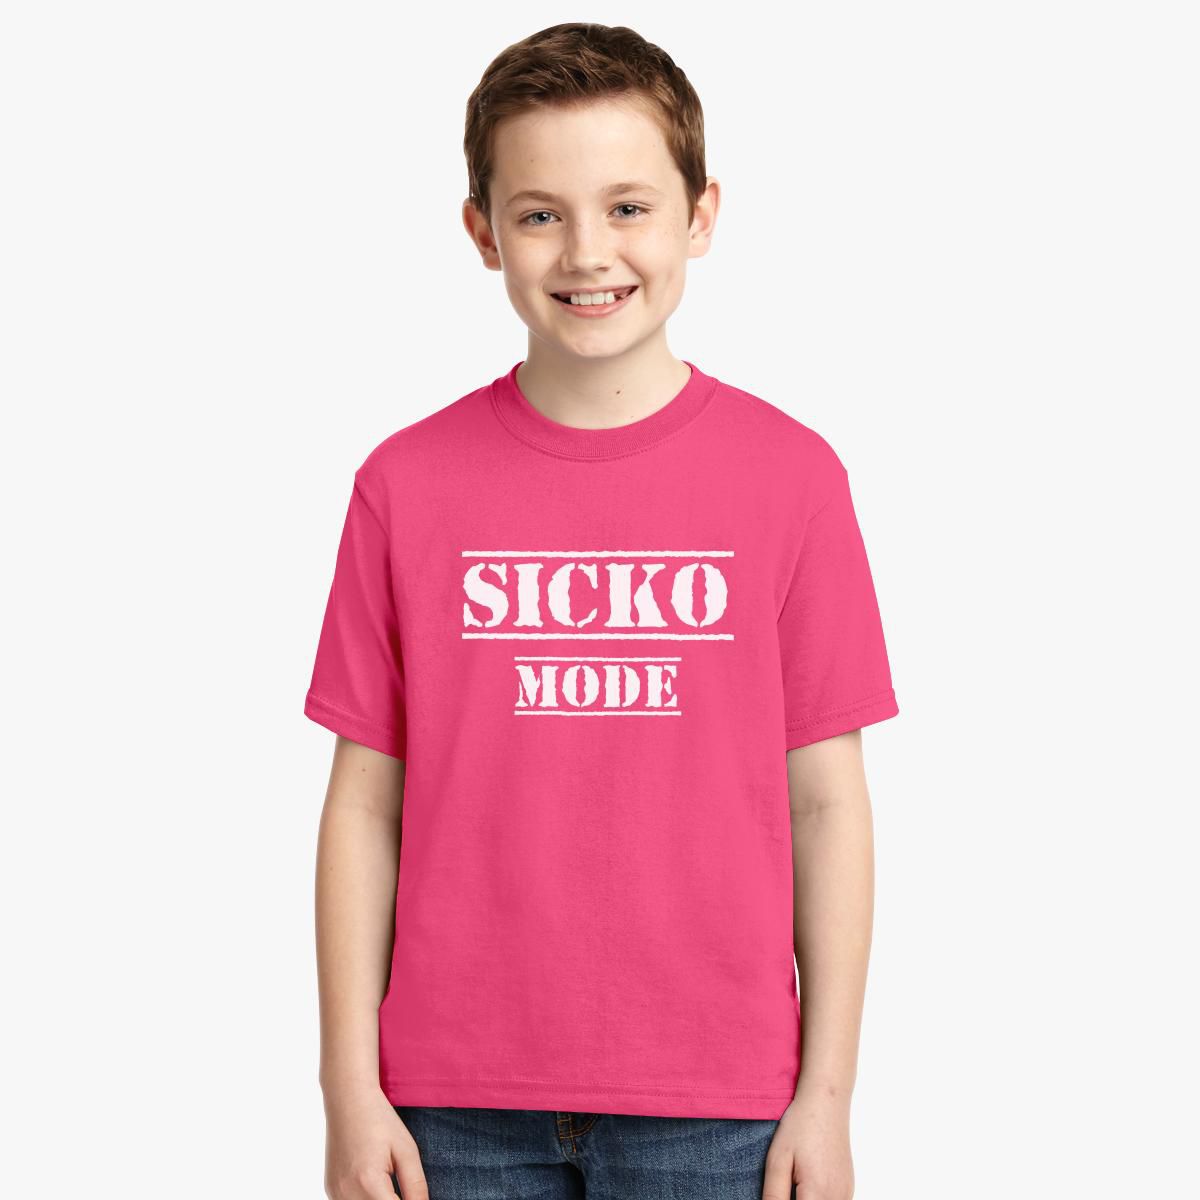 Sicko Mode Youth T Shirt Customon